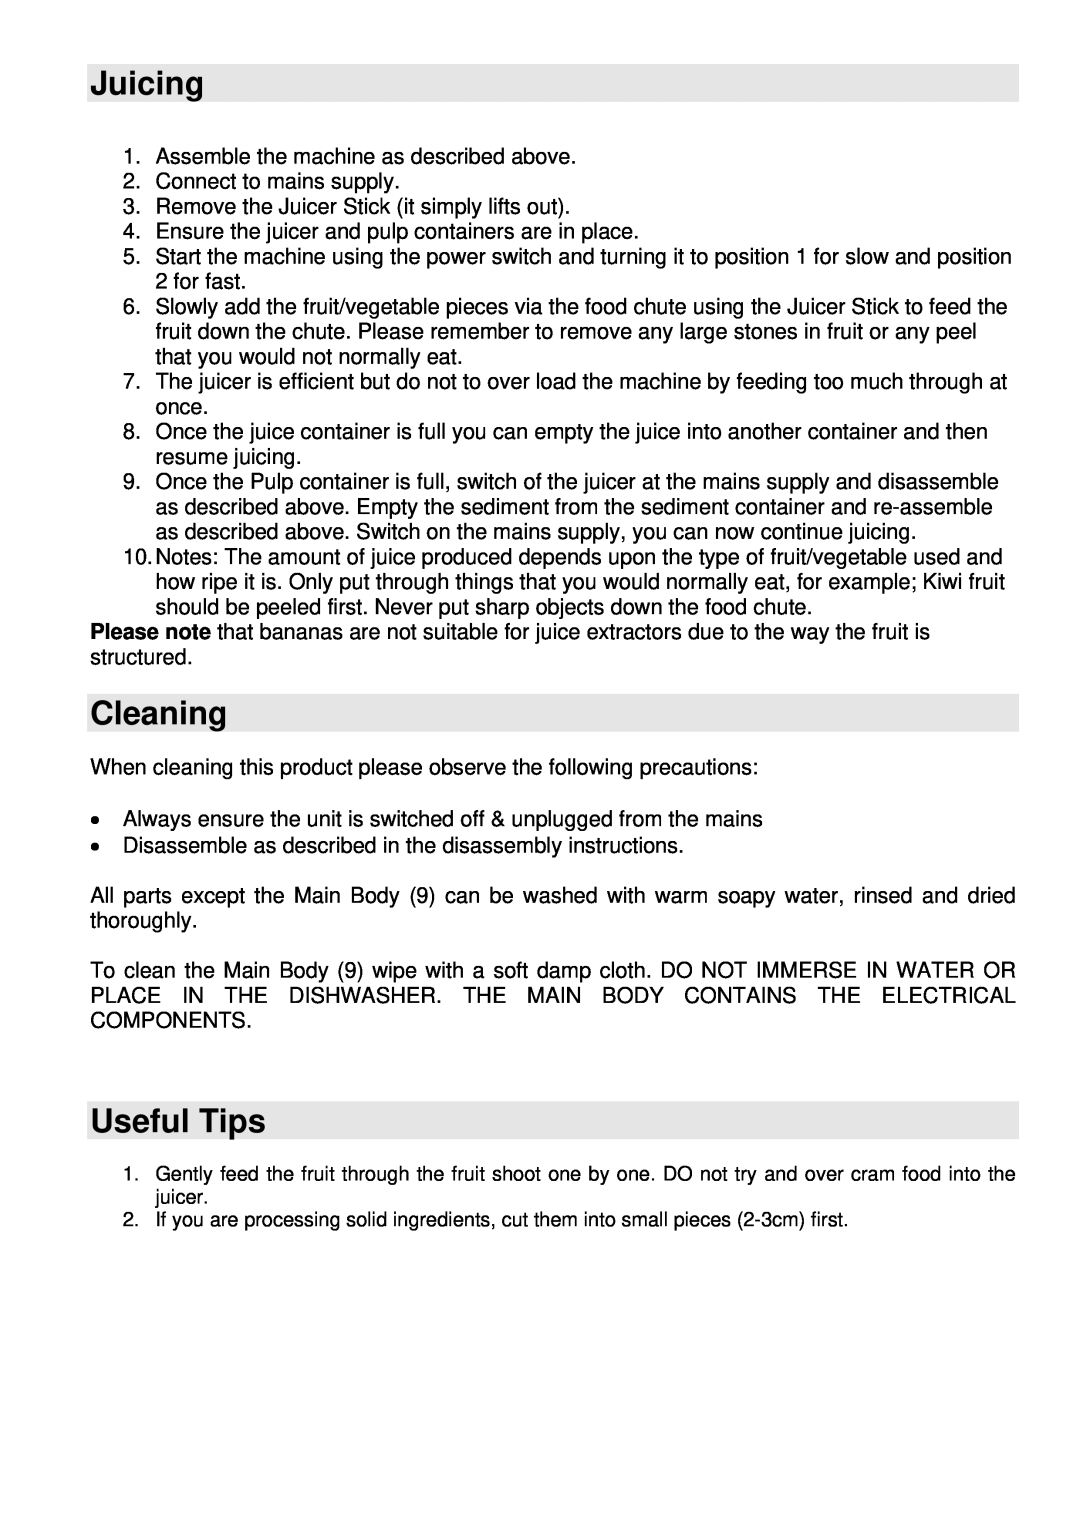 Prima PJE020 manual Juicing, Cleaning, Useful Tips 